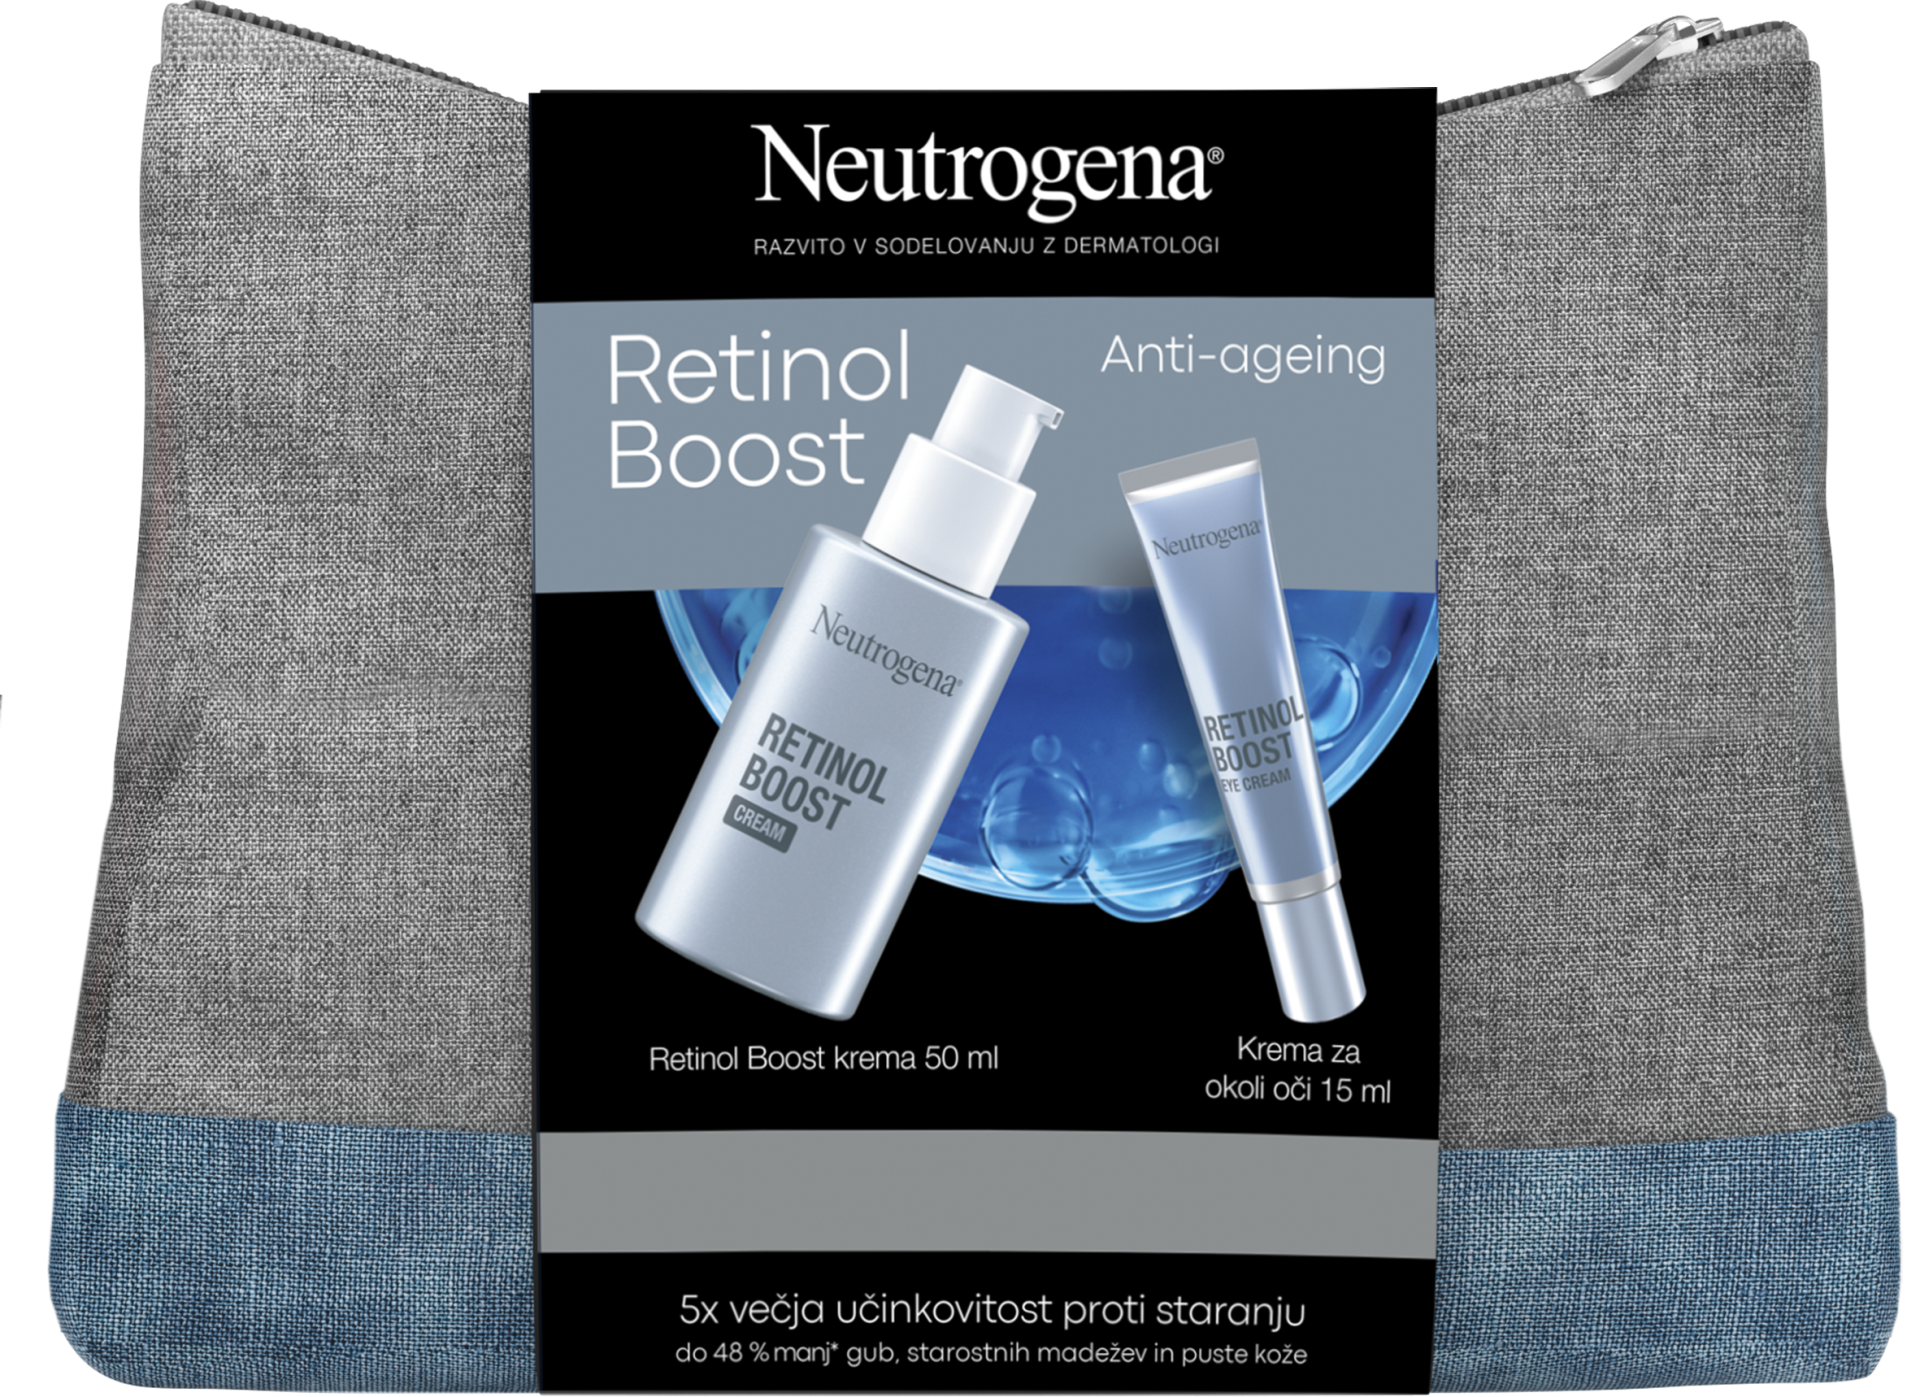 Neutrogena Retinol Boost paket za nego obraza (krema 50 ml + krema za okoli oči 15 ml + toaletna torbica)